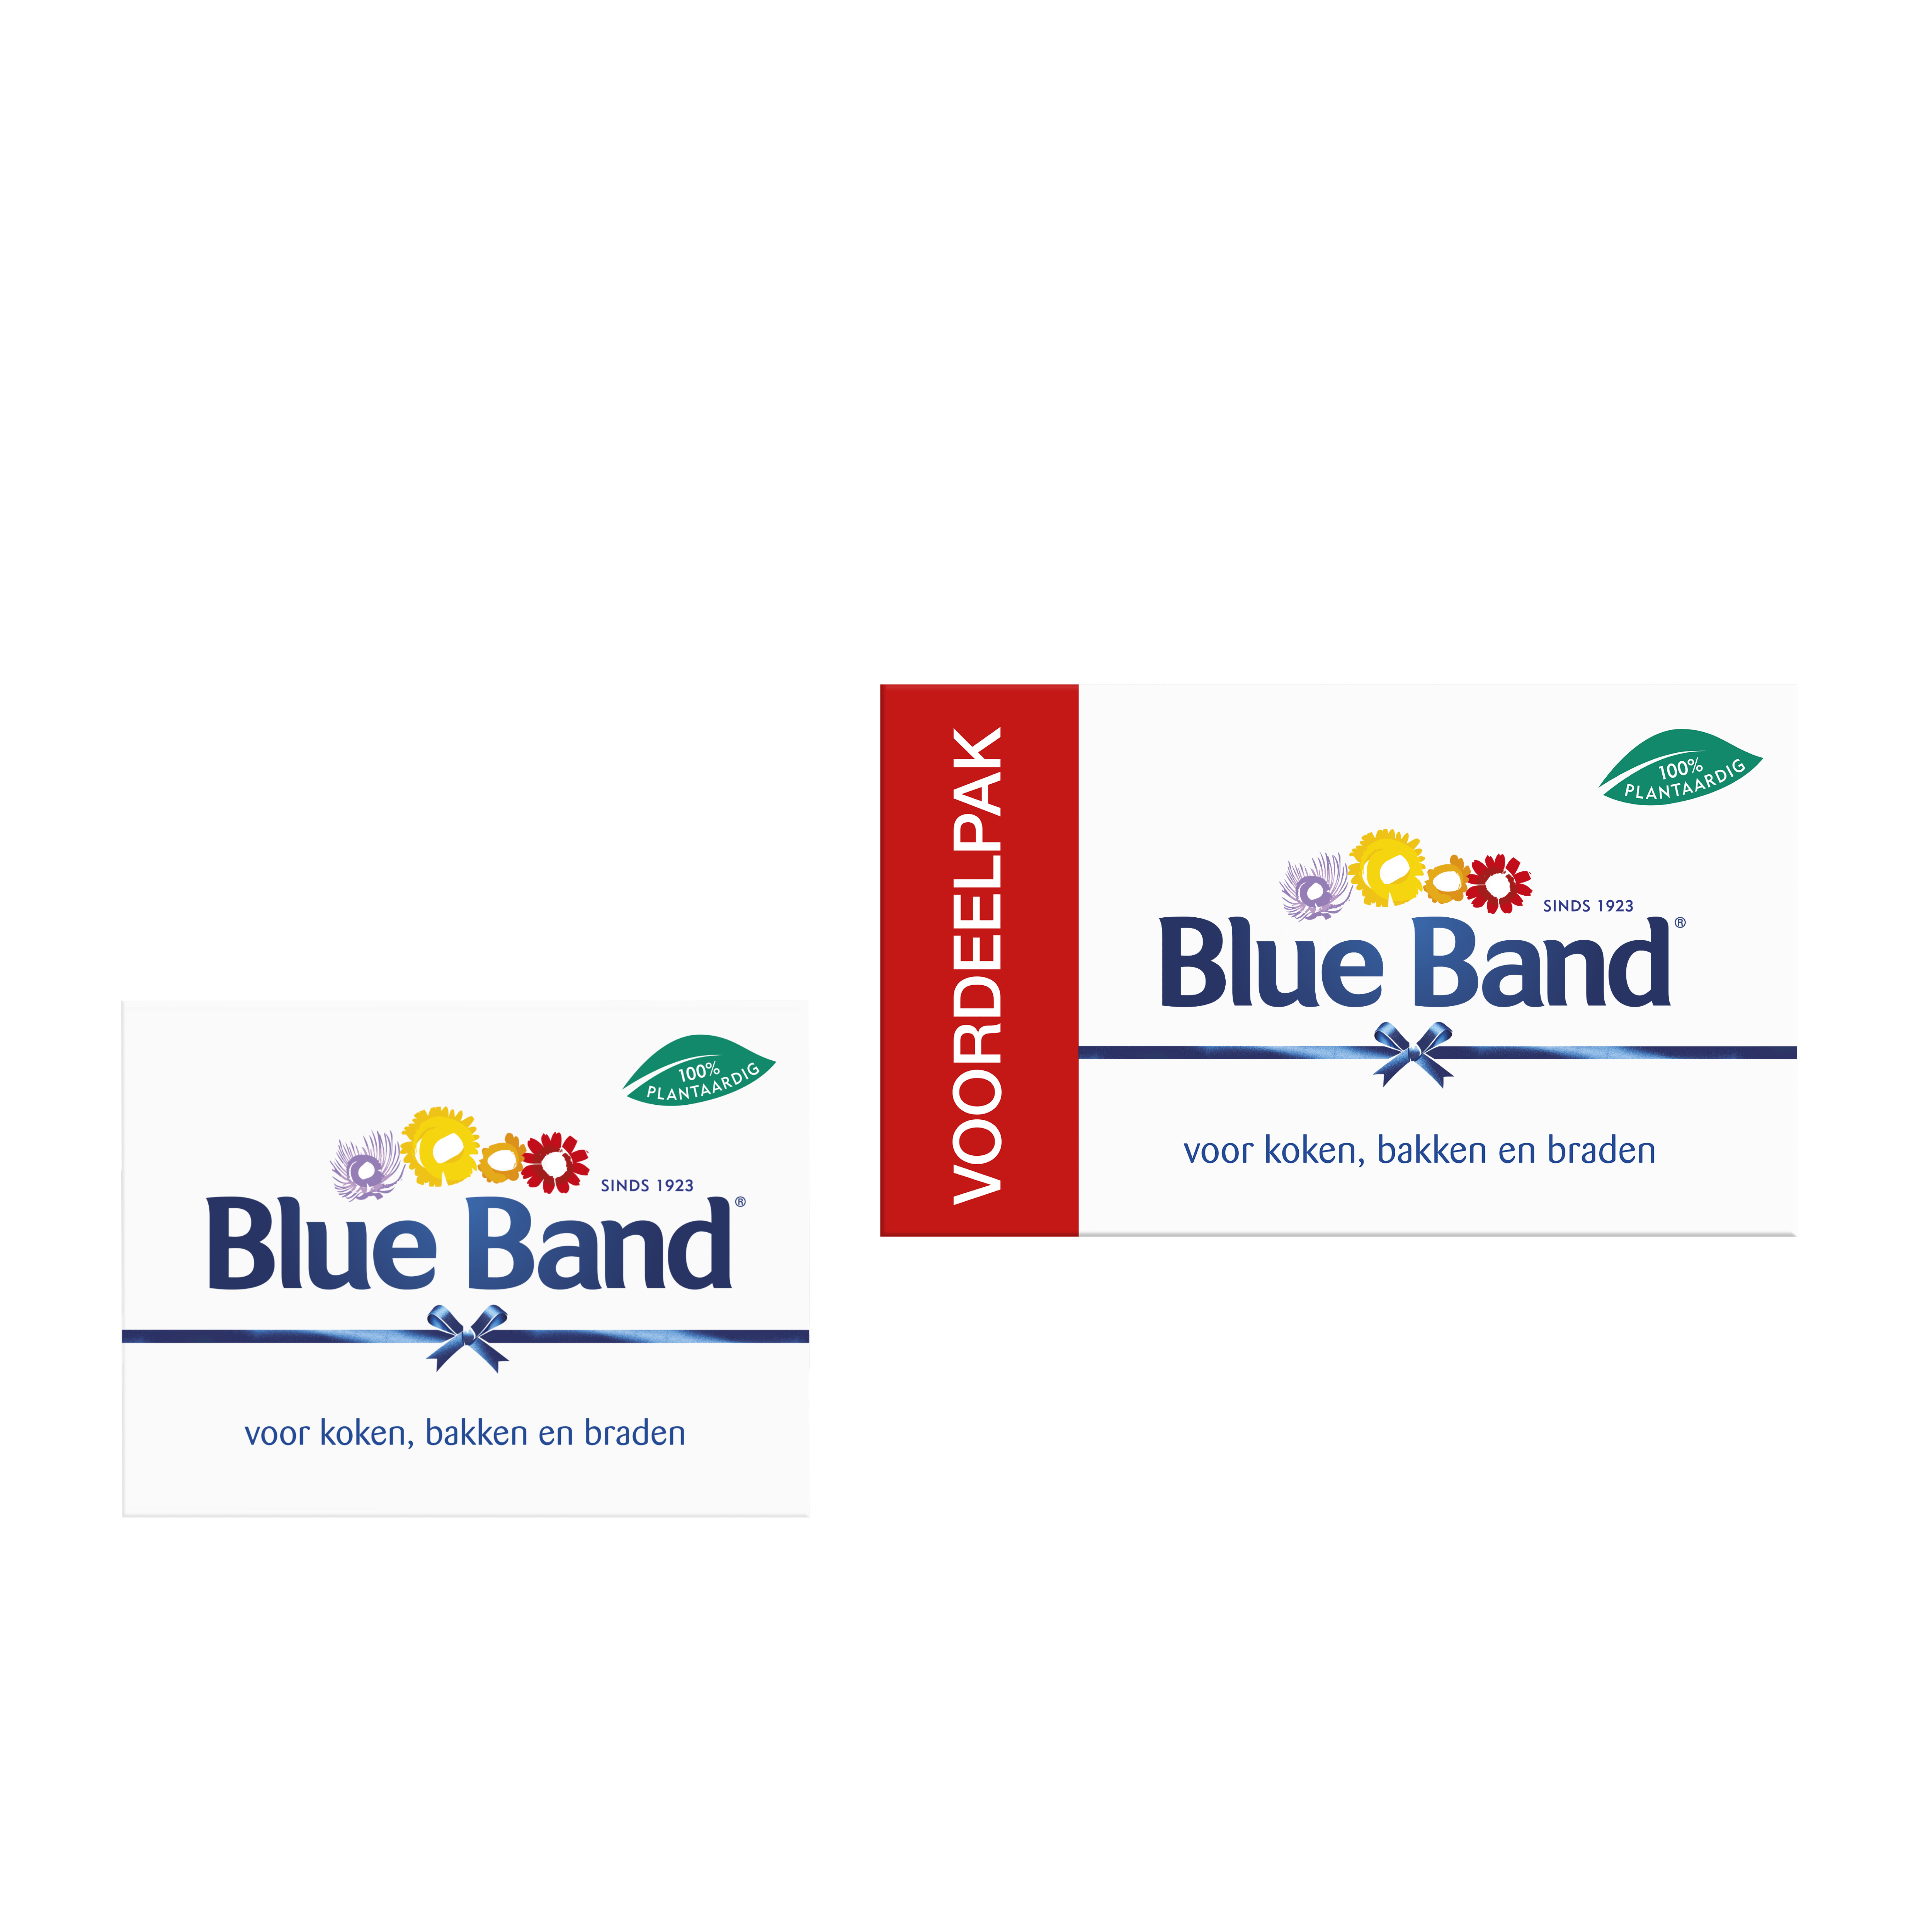 blue band